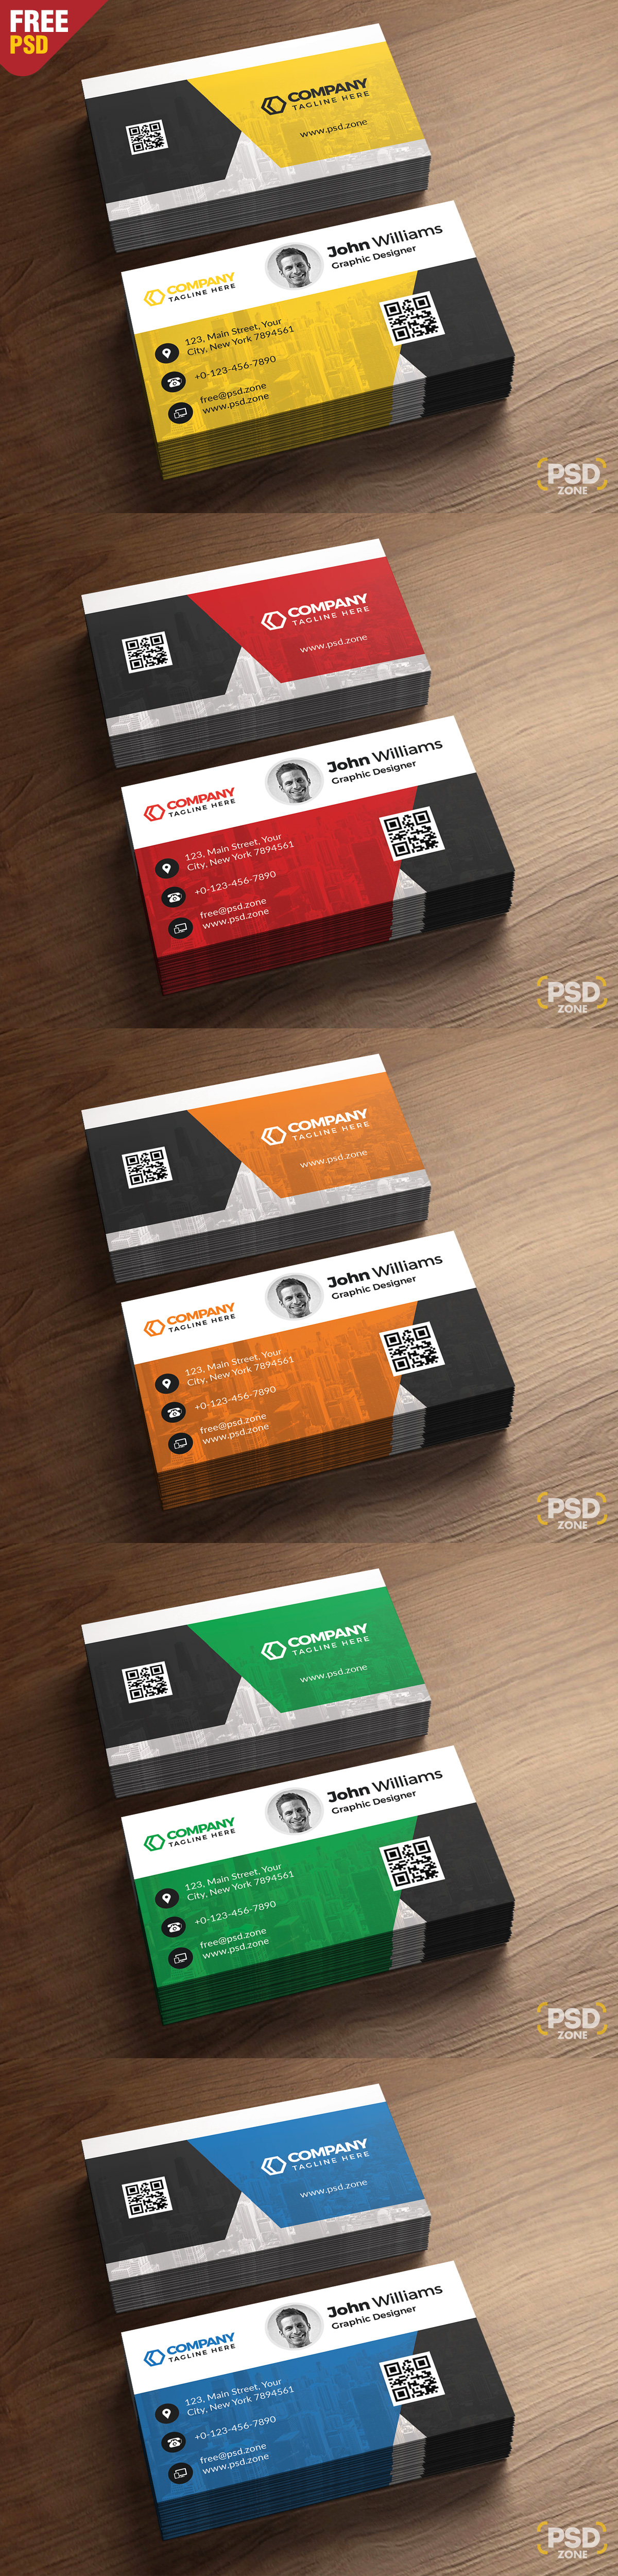 Corporate Business Card Free PSD Bundle